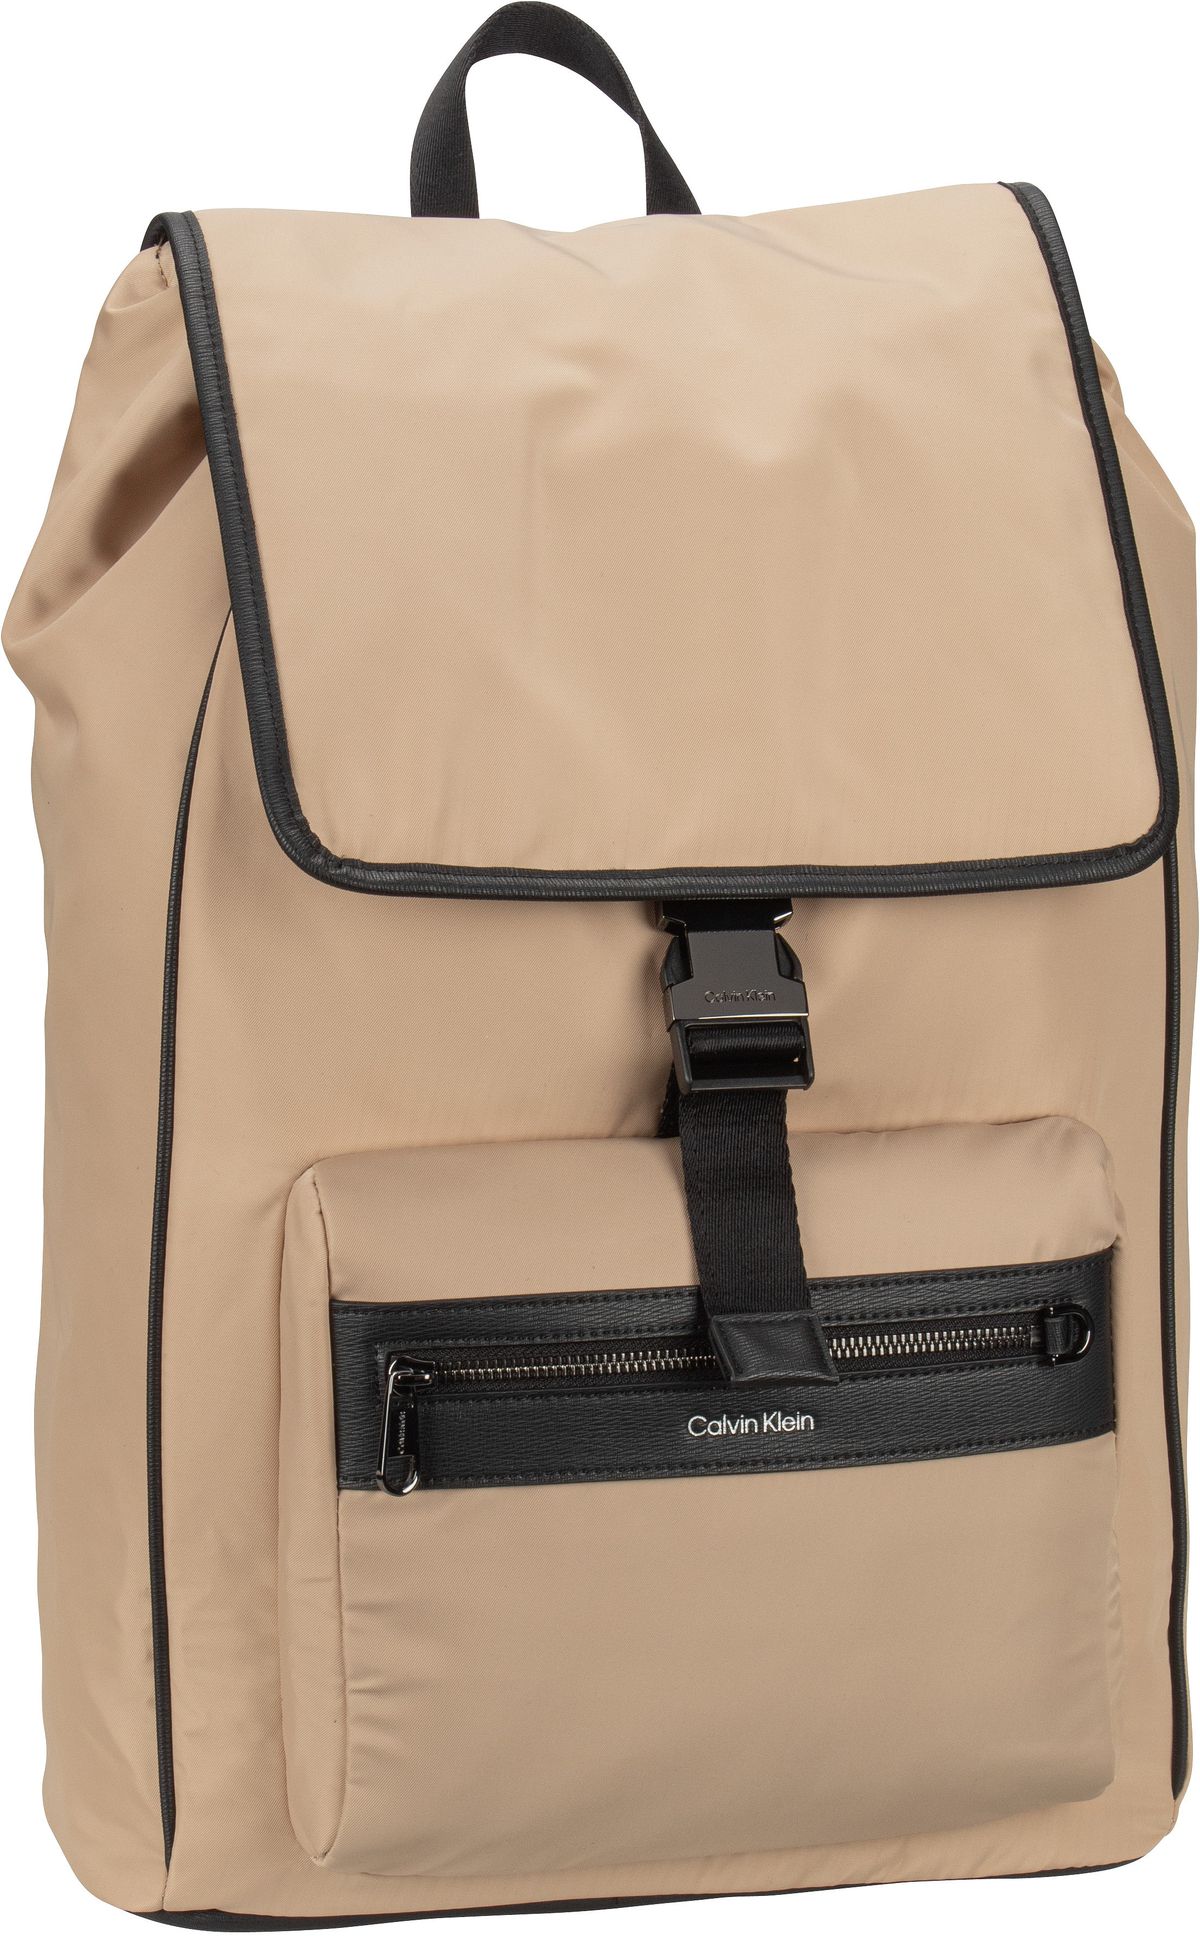 calvin klein -  Rucksack / Daypack CK Elevated Flap Backpack PSP23 Tavertine (31.7 Liter)